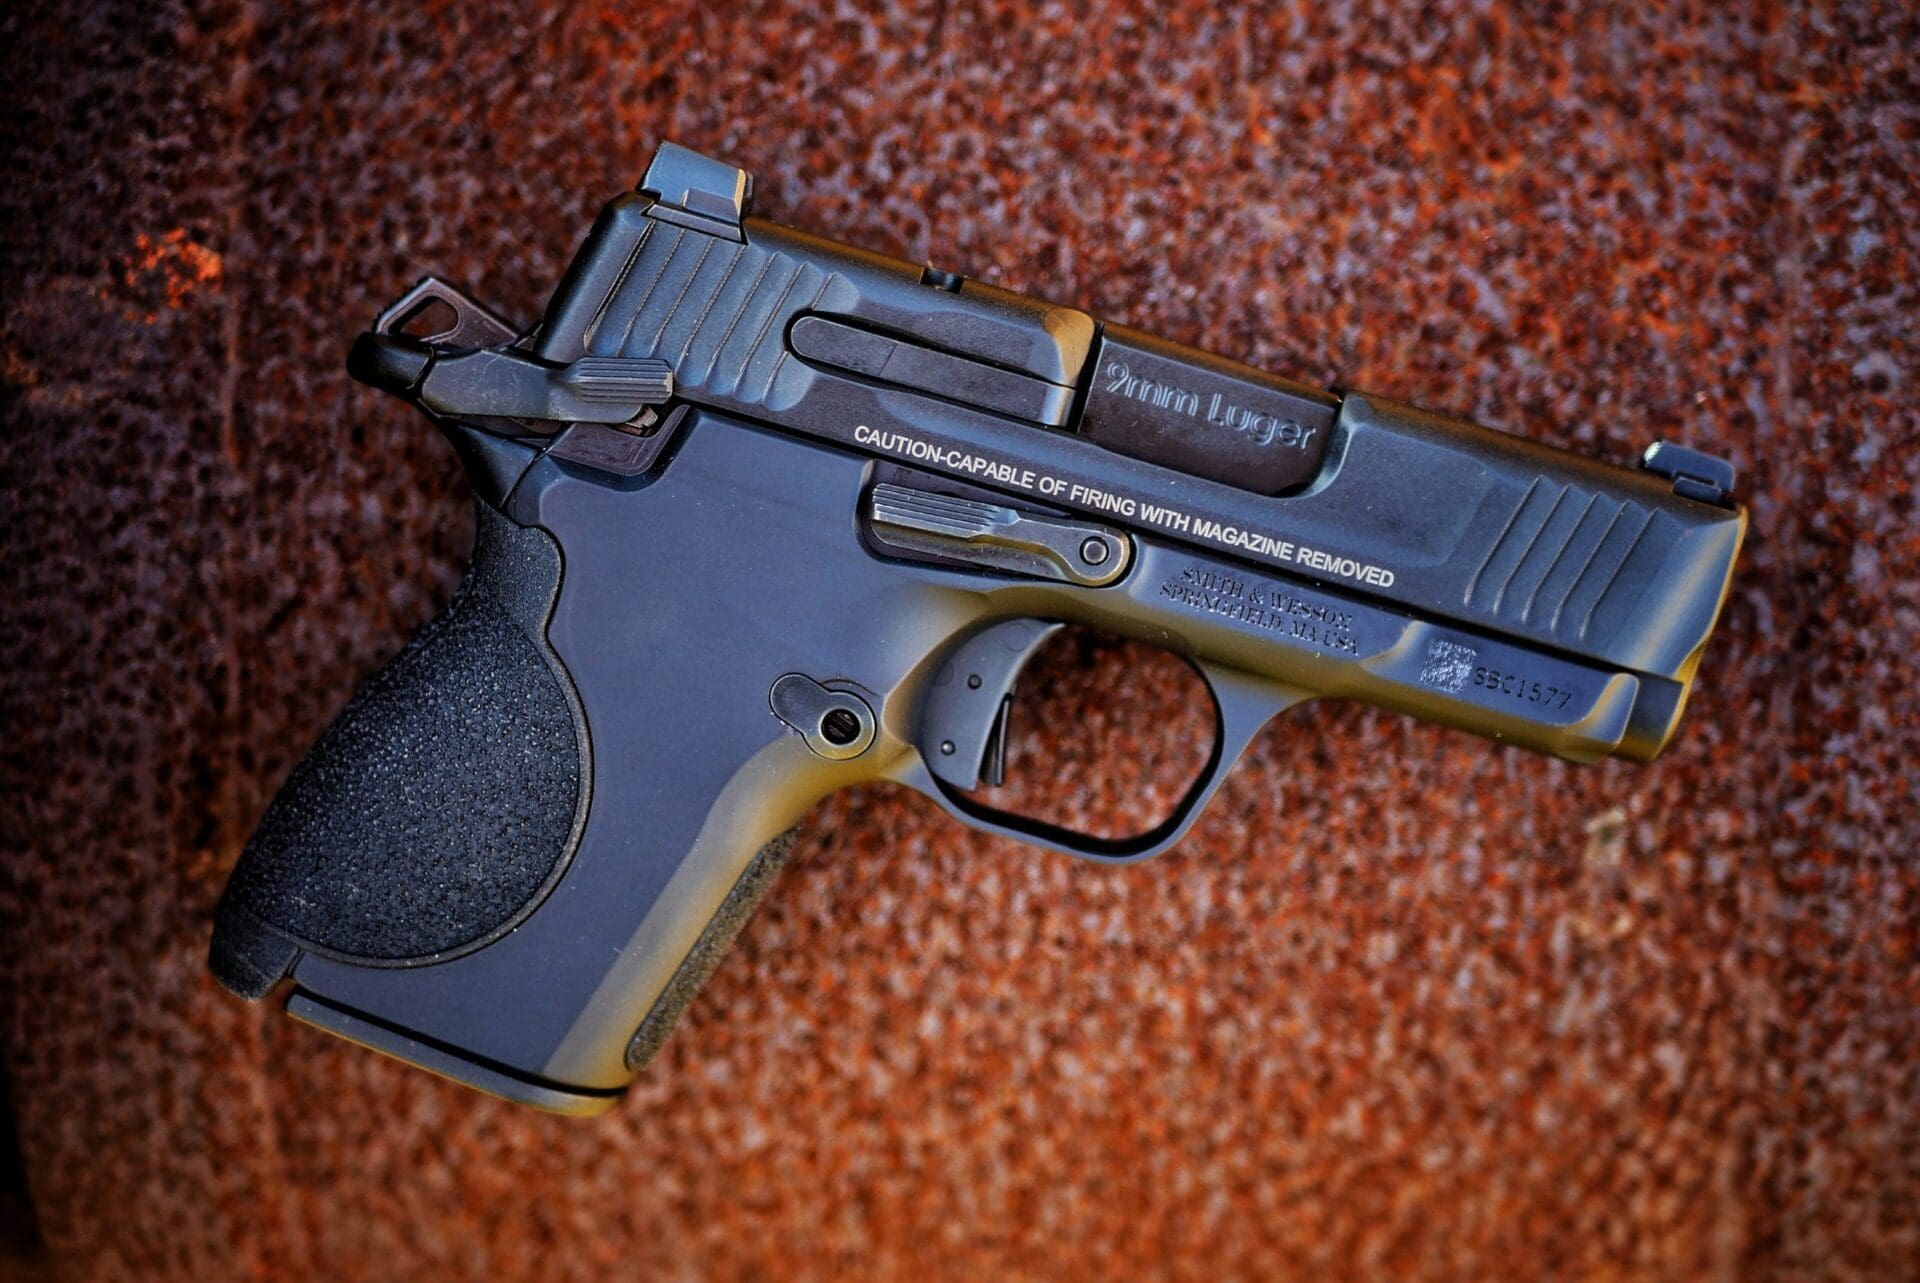 9mm pistol compact